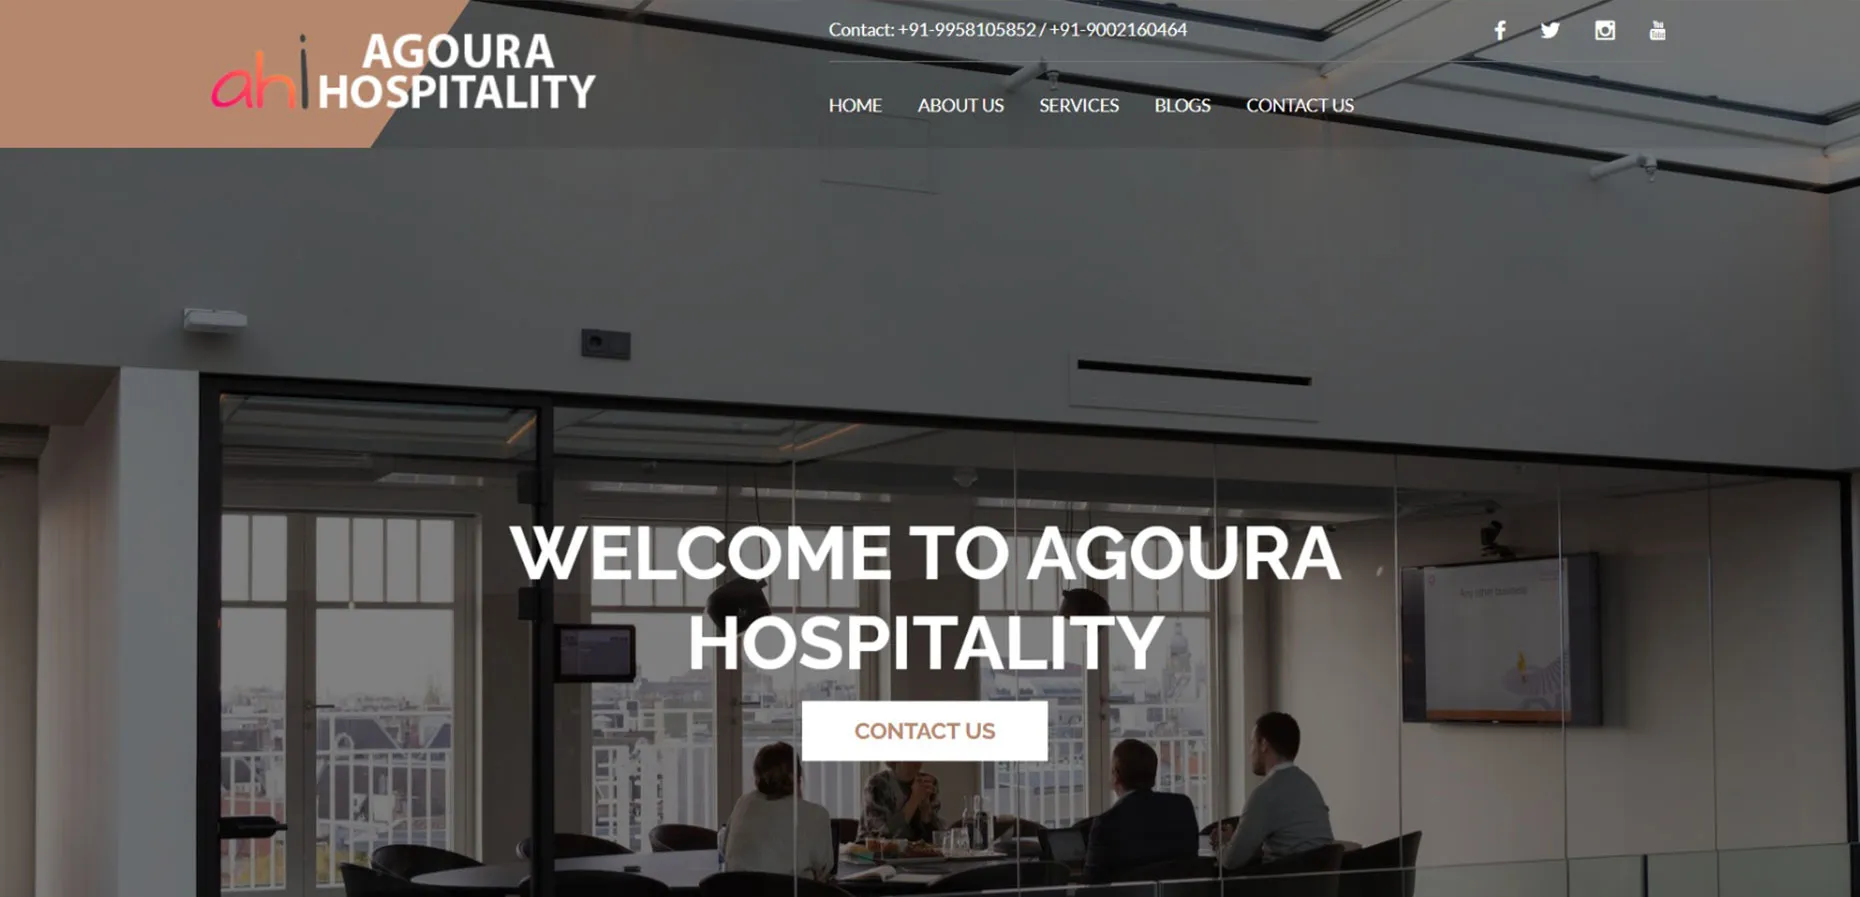 Agoura Hospitality